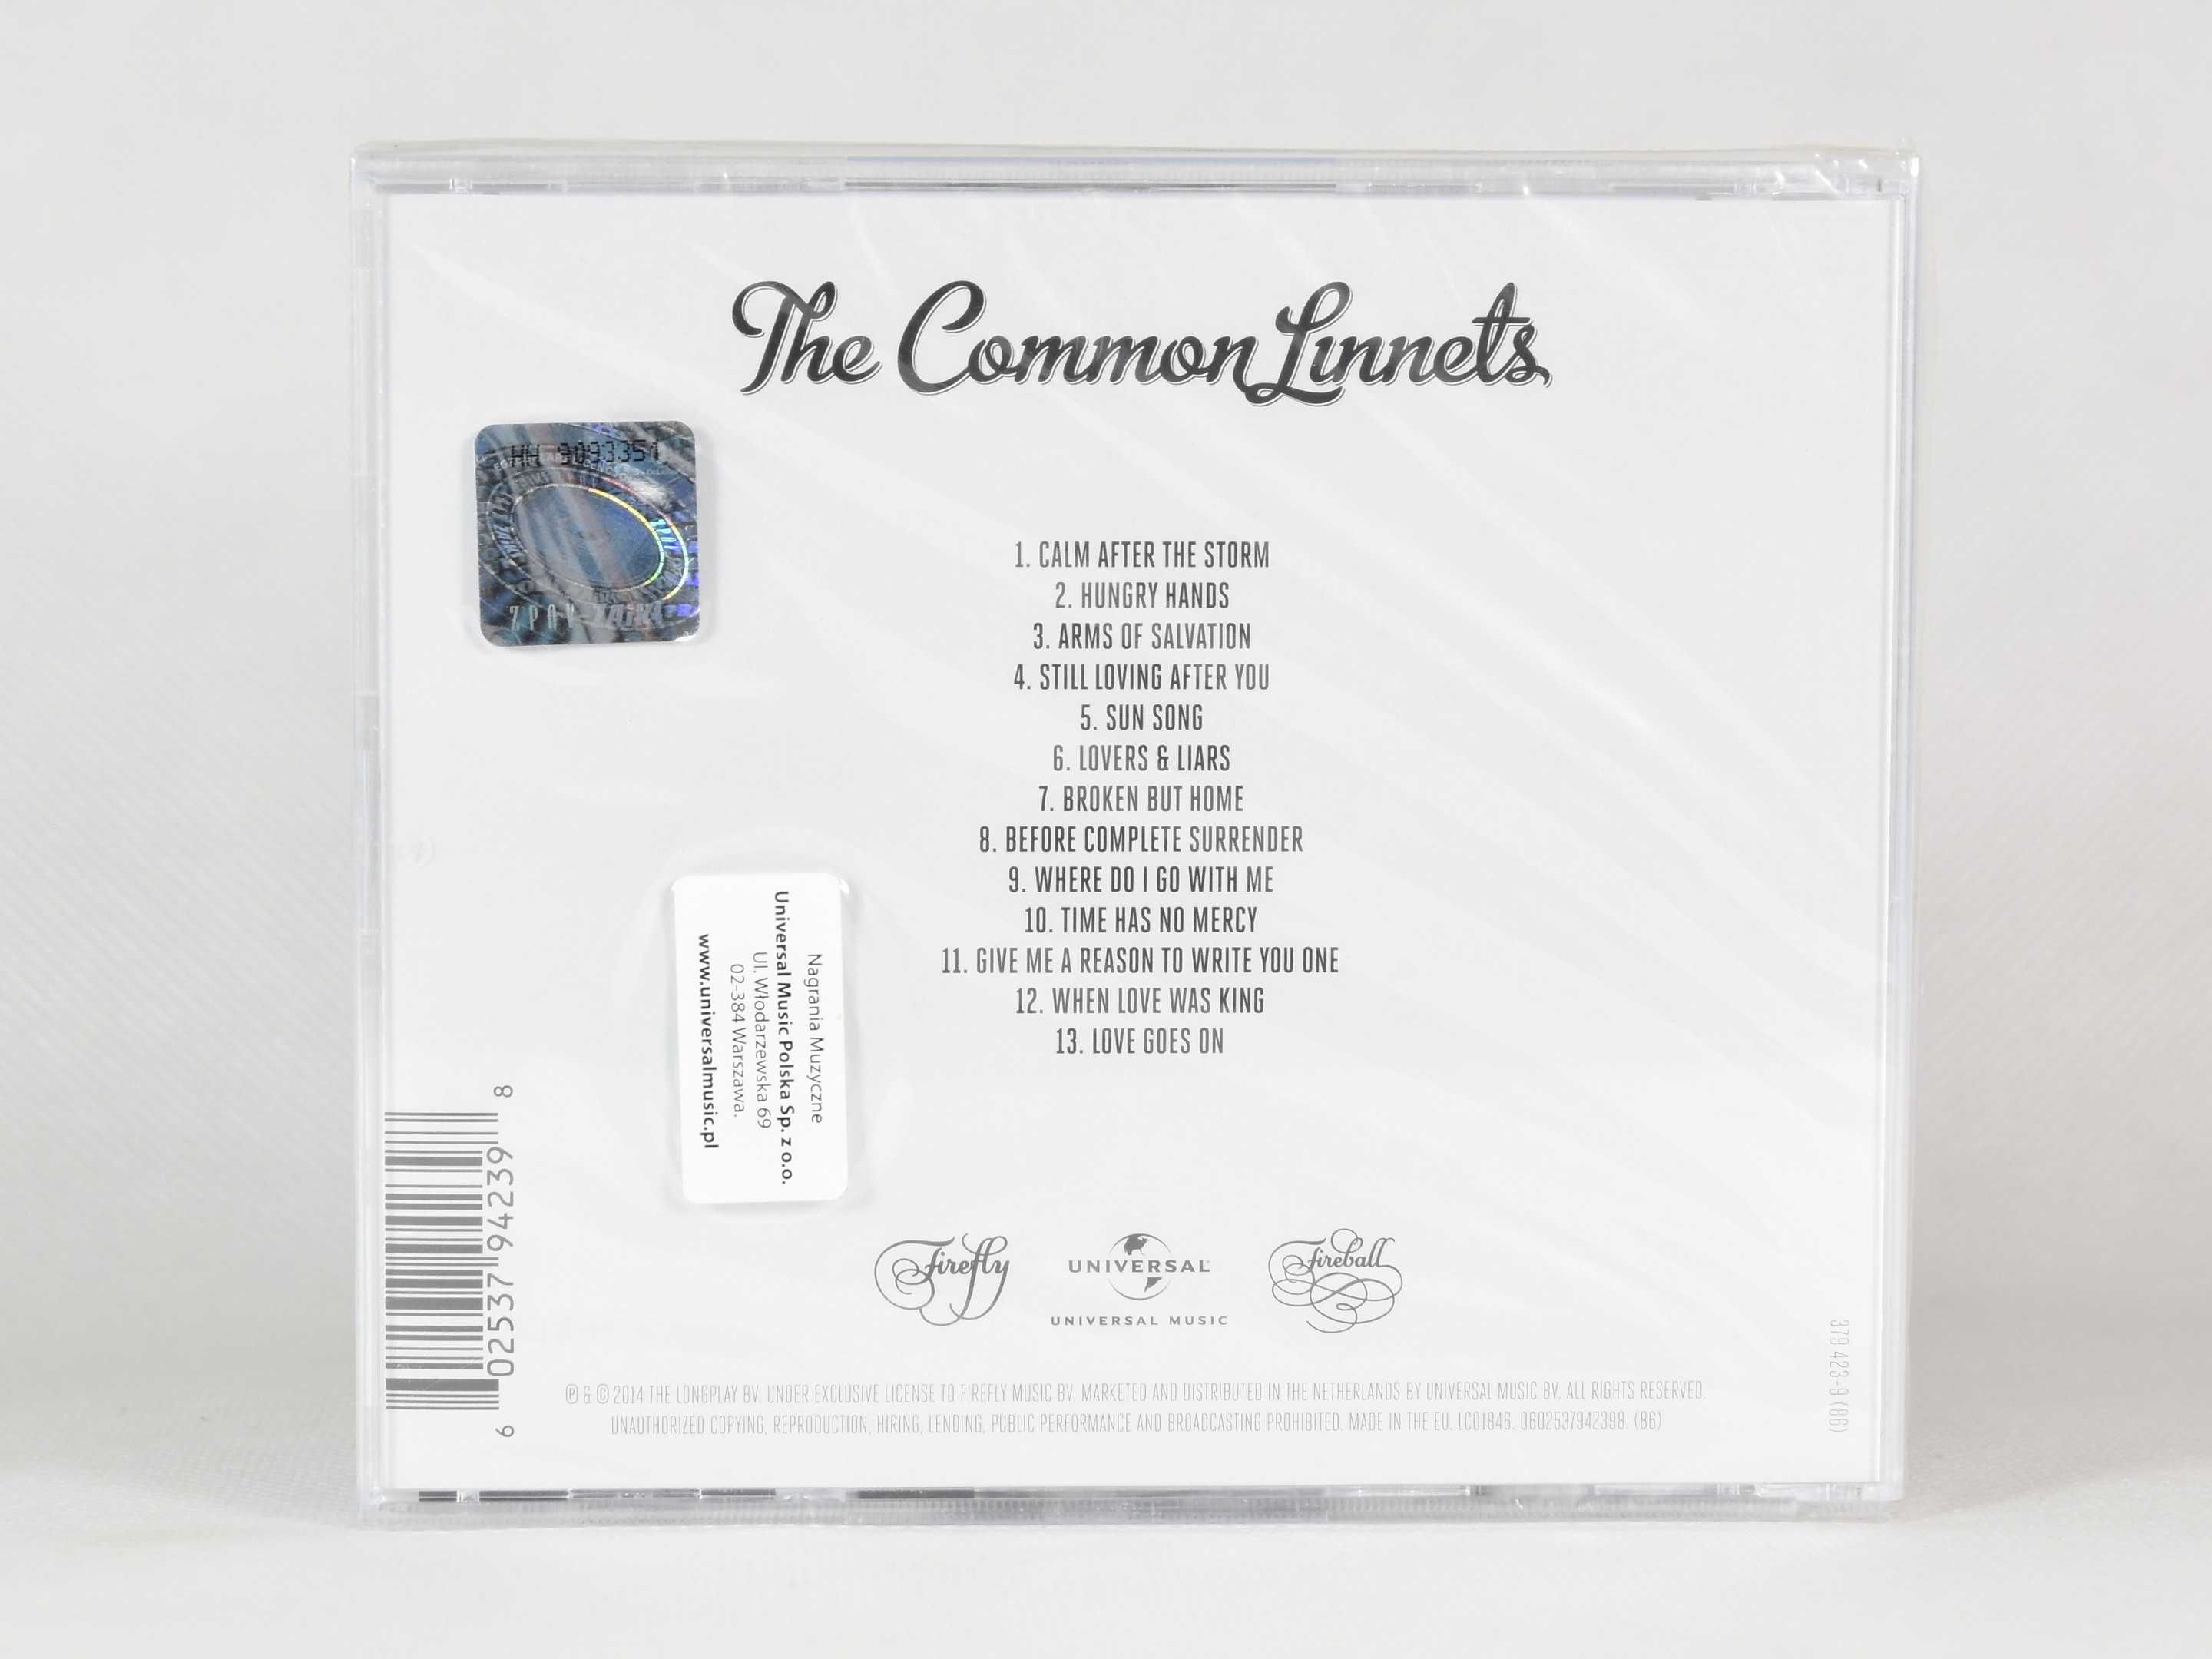 Płyta CD: The Common Linnets - The Common Linnets (NOWA)